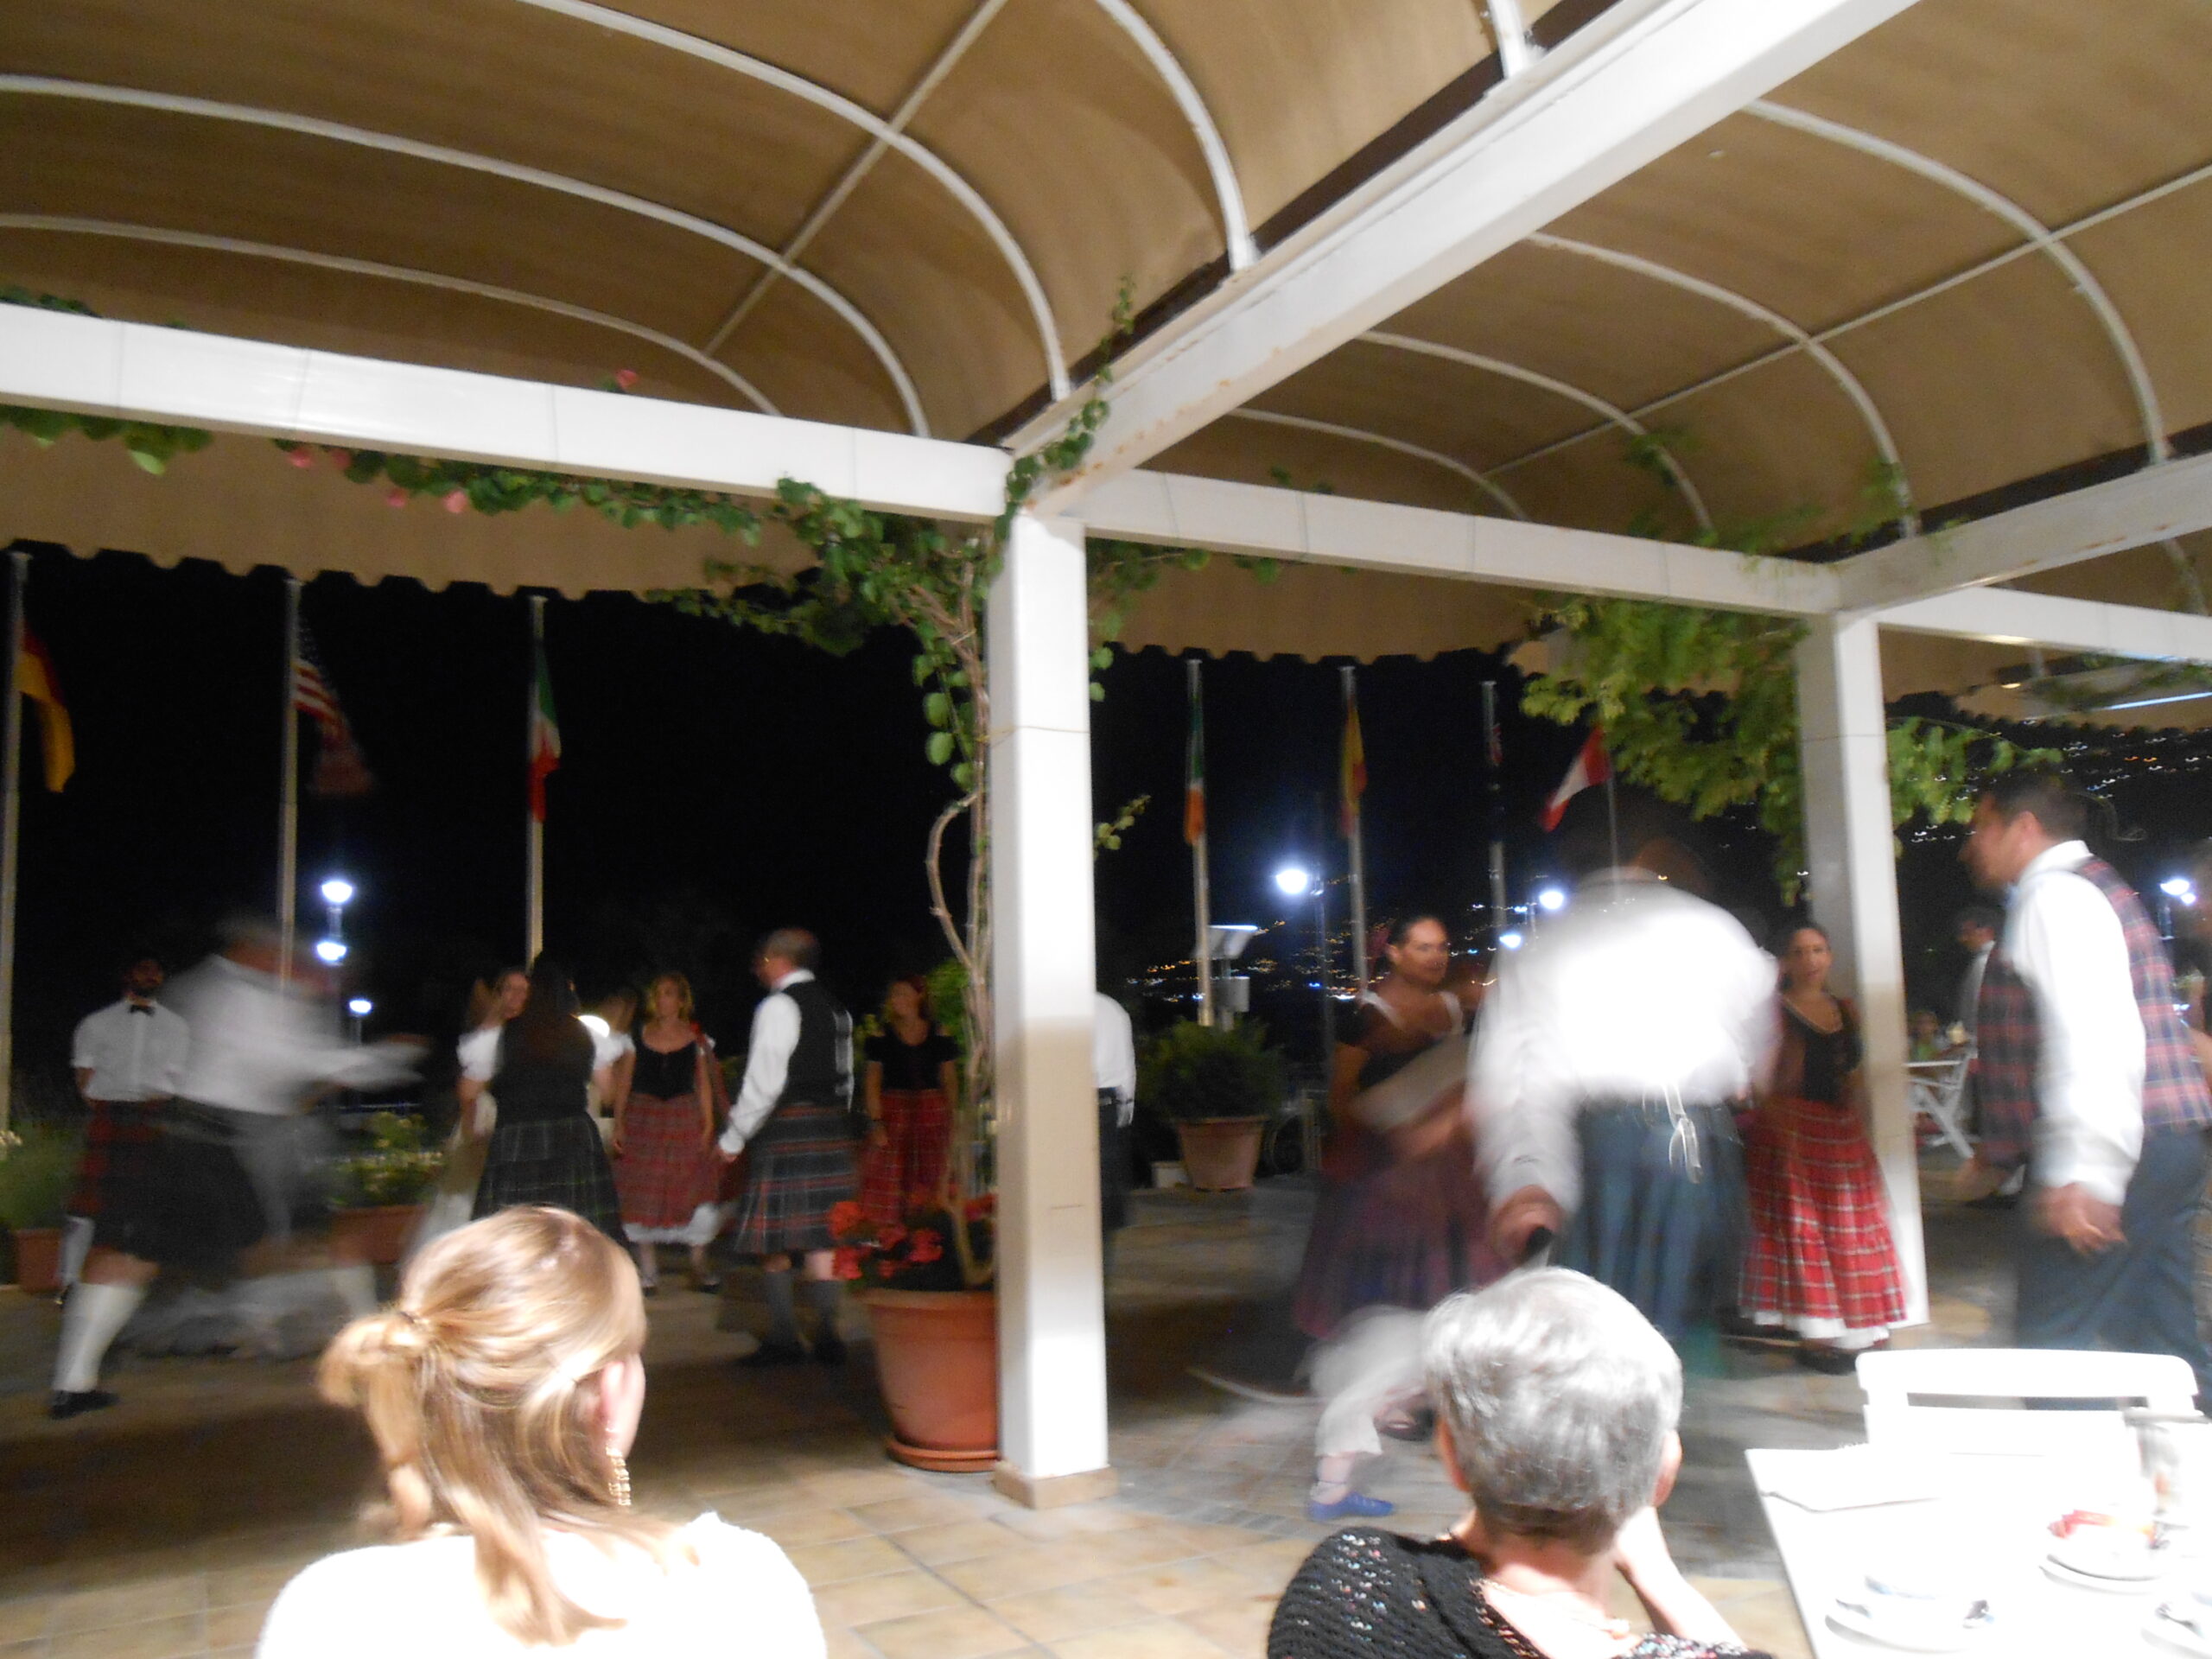 scottish dancers in a pavilion